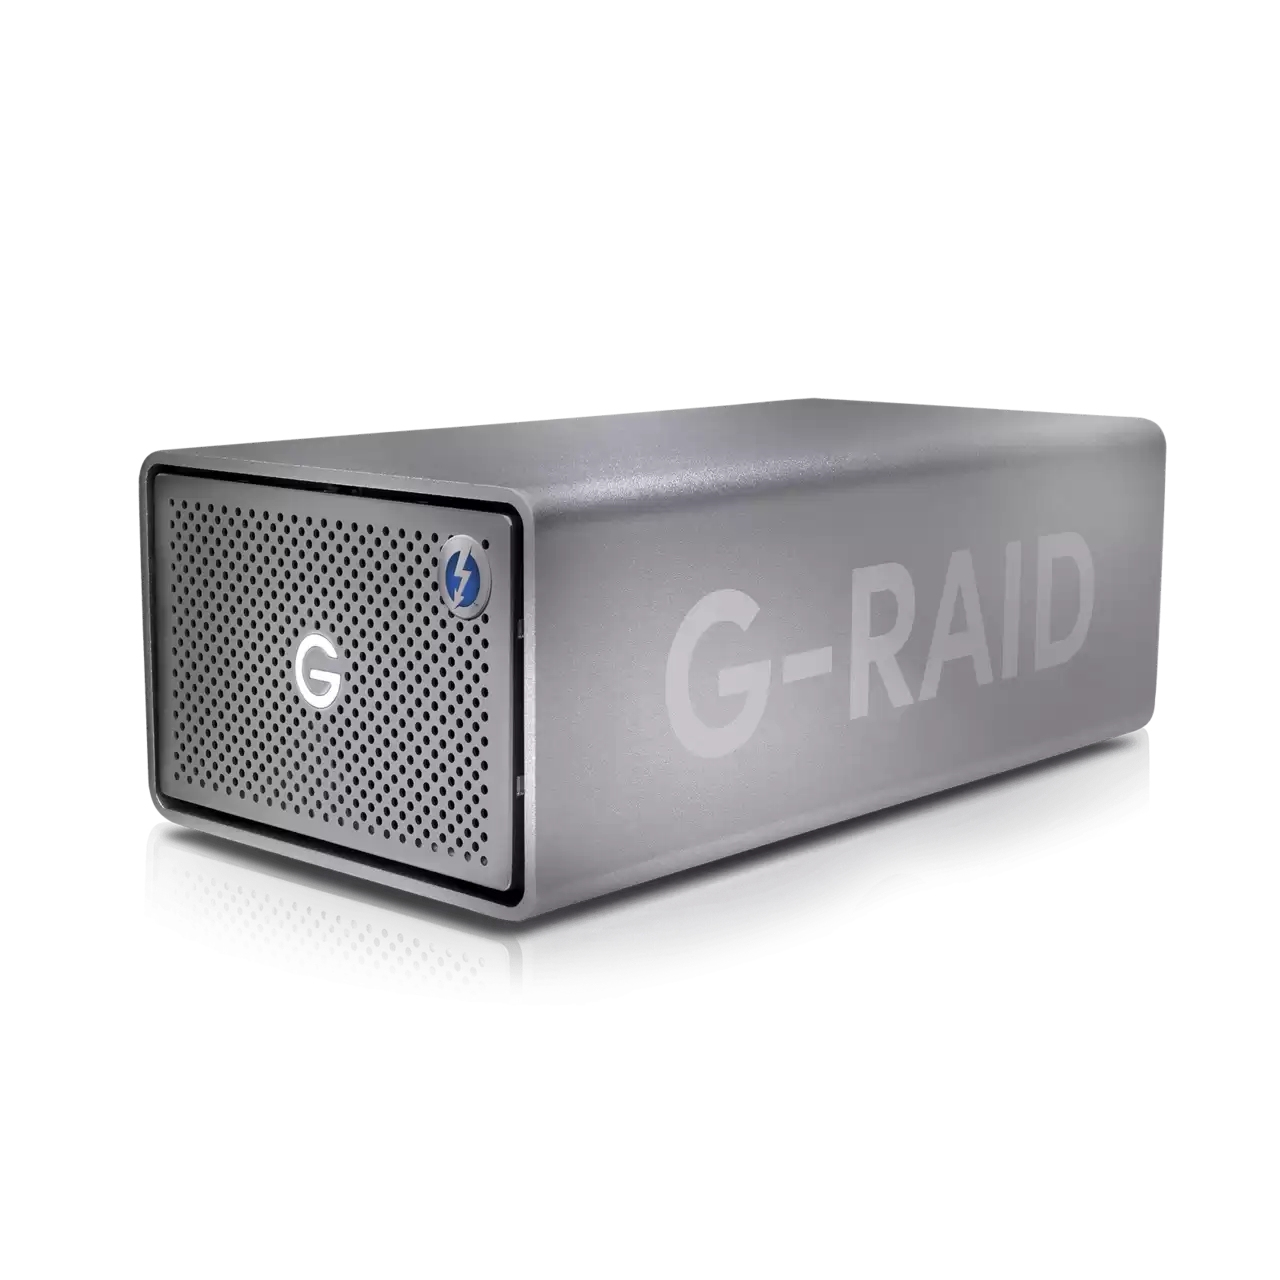  Professional G-RAID 2 12TB 3.5inch Thunderbolt 3 7200RPM USB-C HDMI Port Enterprise-Class 2-Bay Desktop Drive - Space Grey